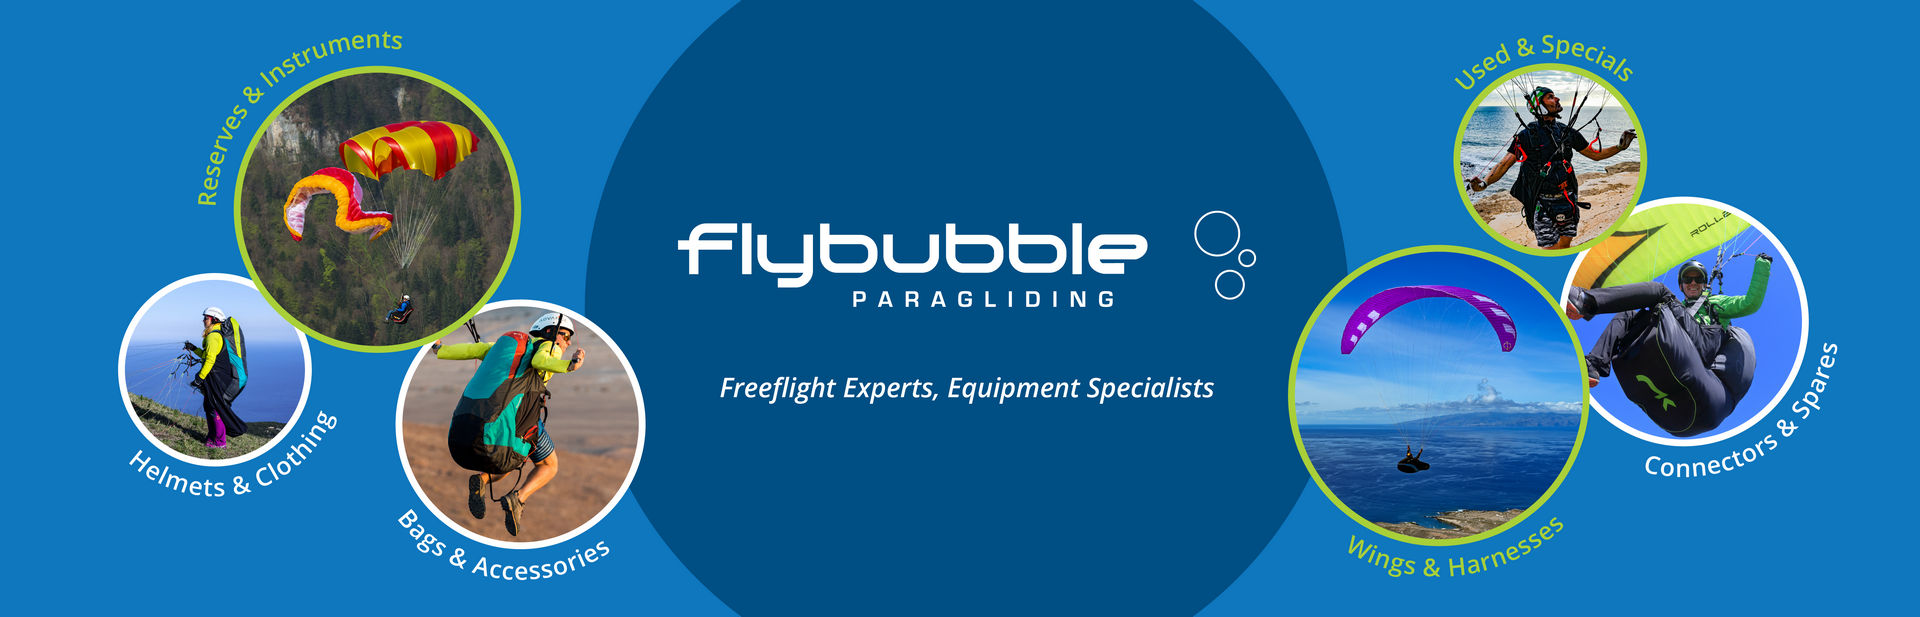 Flybubble Online Shop - Paragliding Freeflight Equipment Emporium